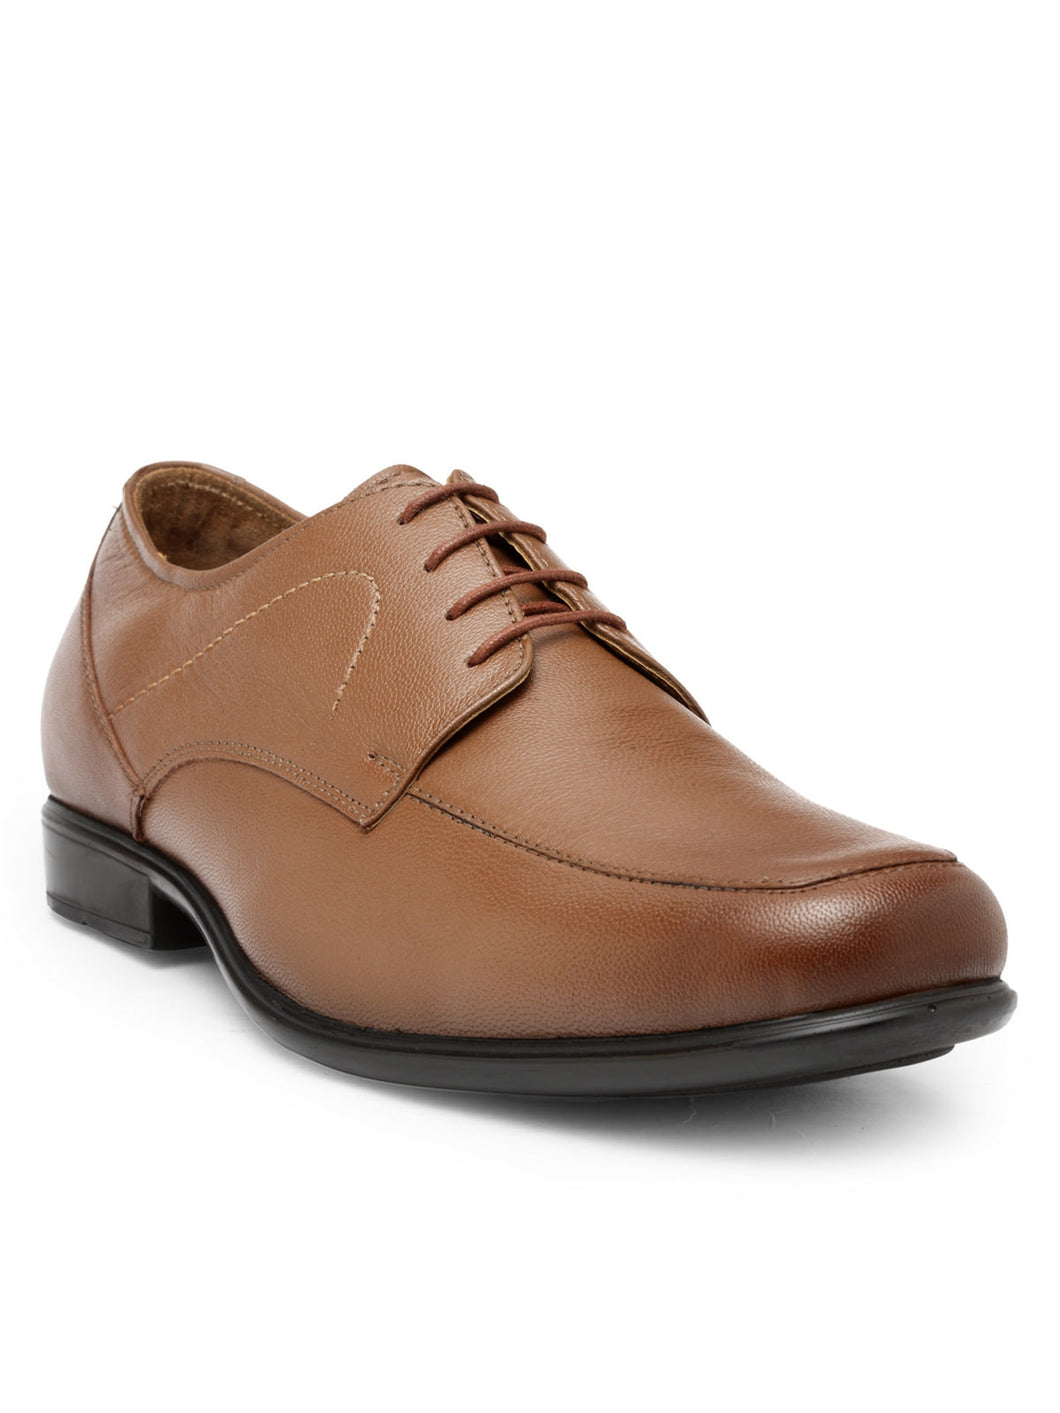 Teakwood Leather Tan Formal Shoes